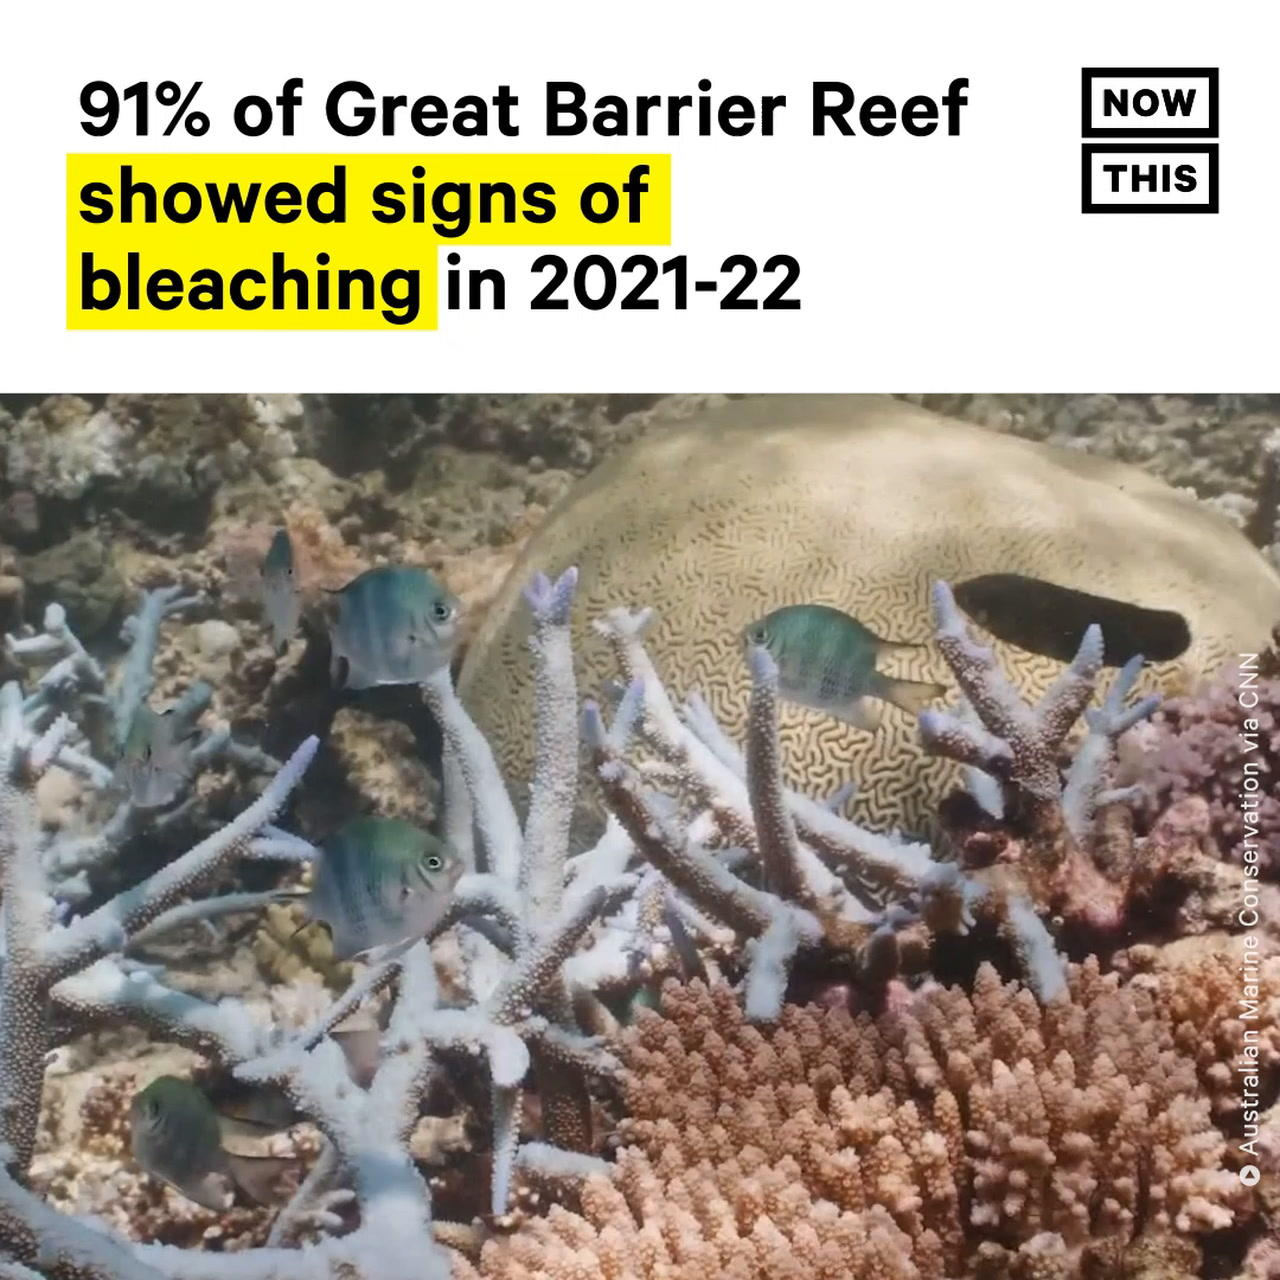 Great Barrier Reef Experiences 'Mass Bleaching Event'